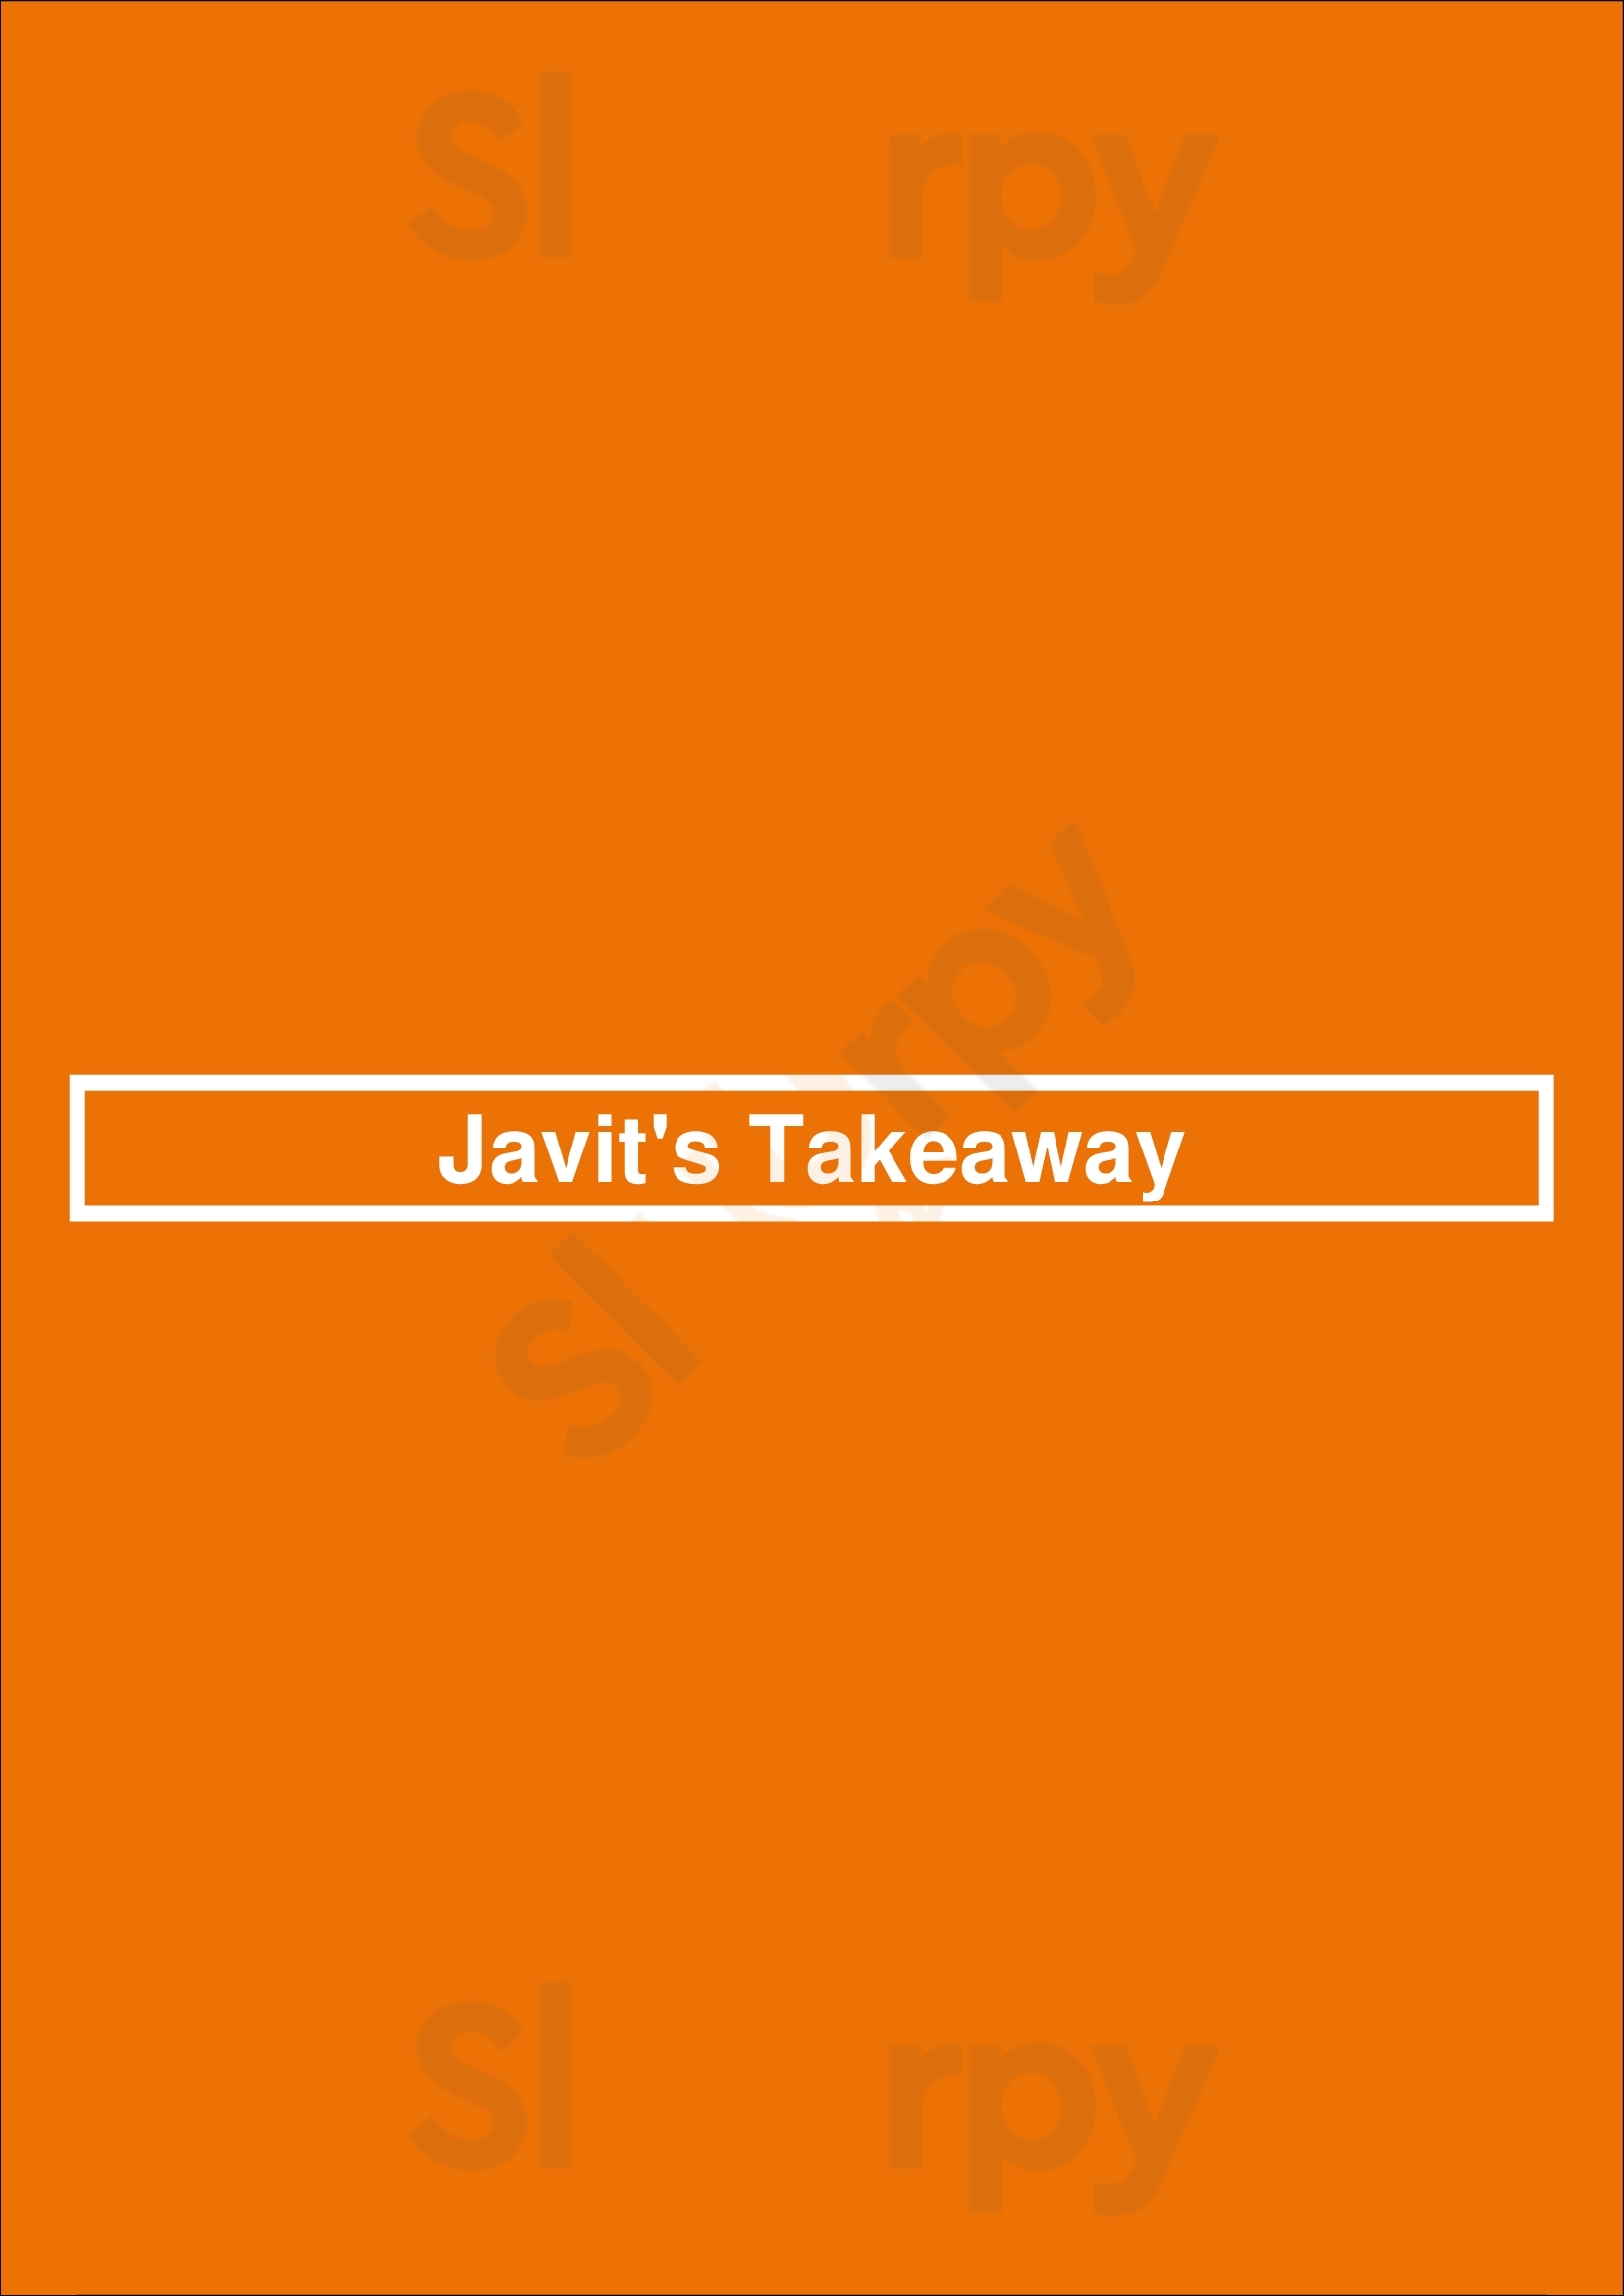 Javit's Takeaway Edinburgh Menu - 1